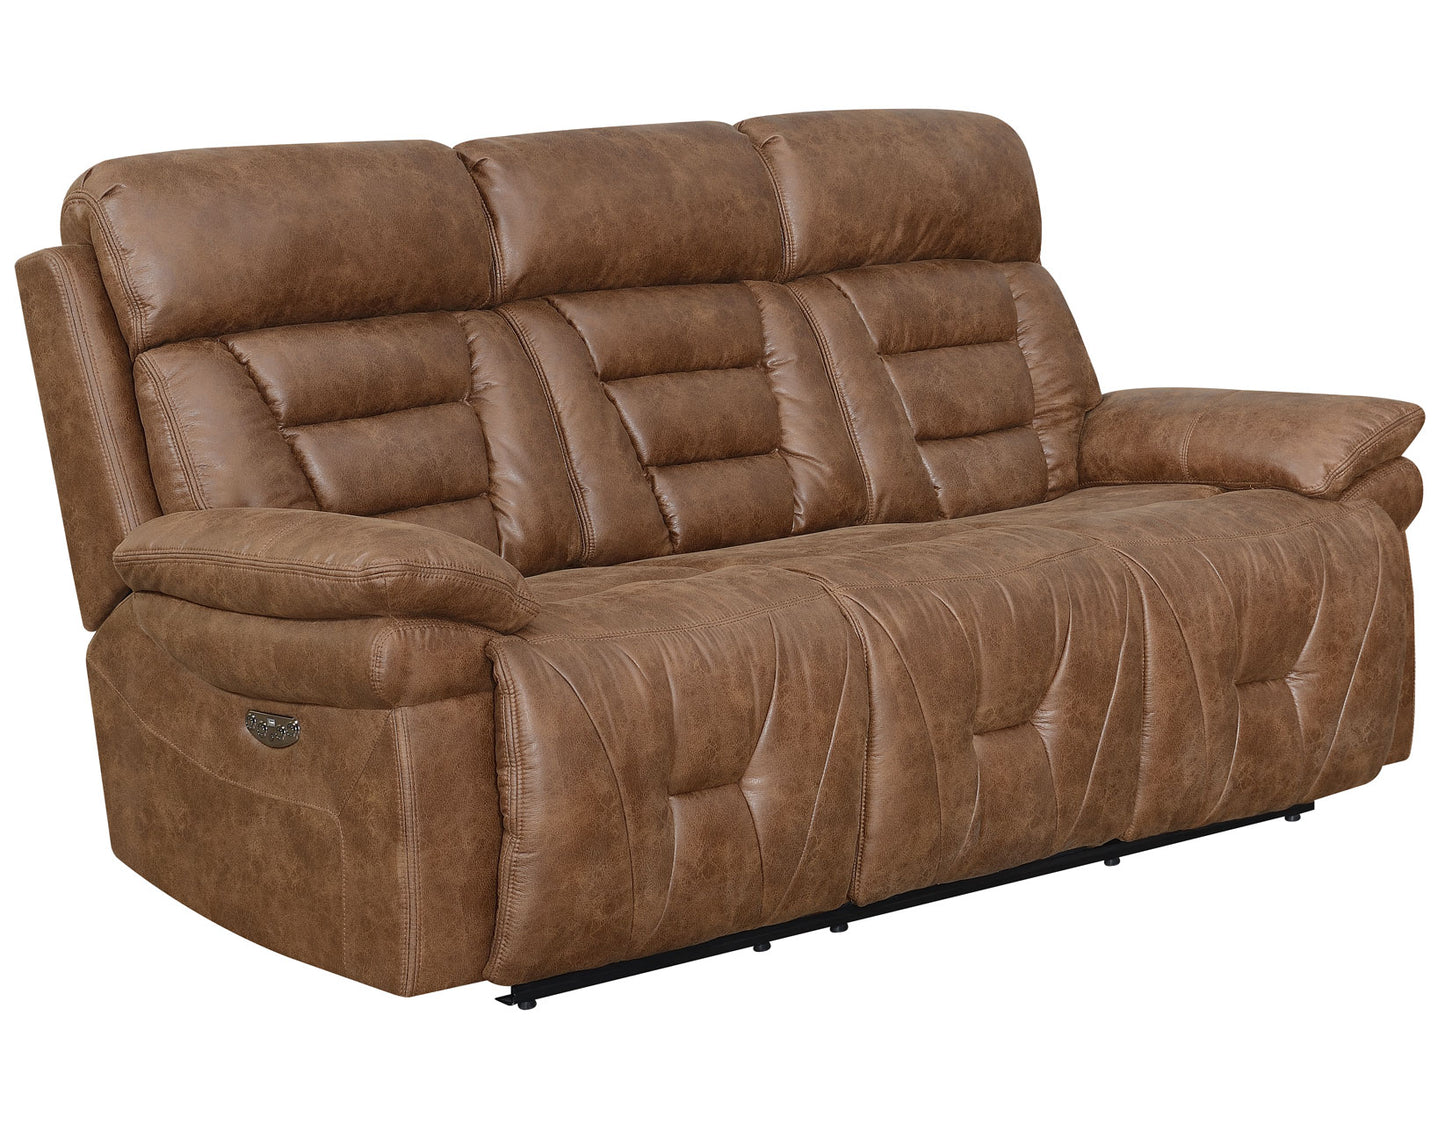 Brock 3 Piece Dual Power Motion Set
(Sofa, Loveseat & Chair)